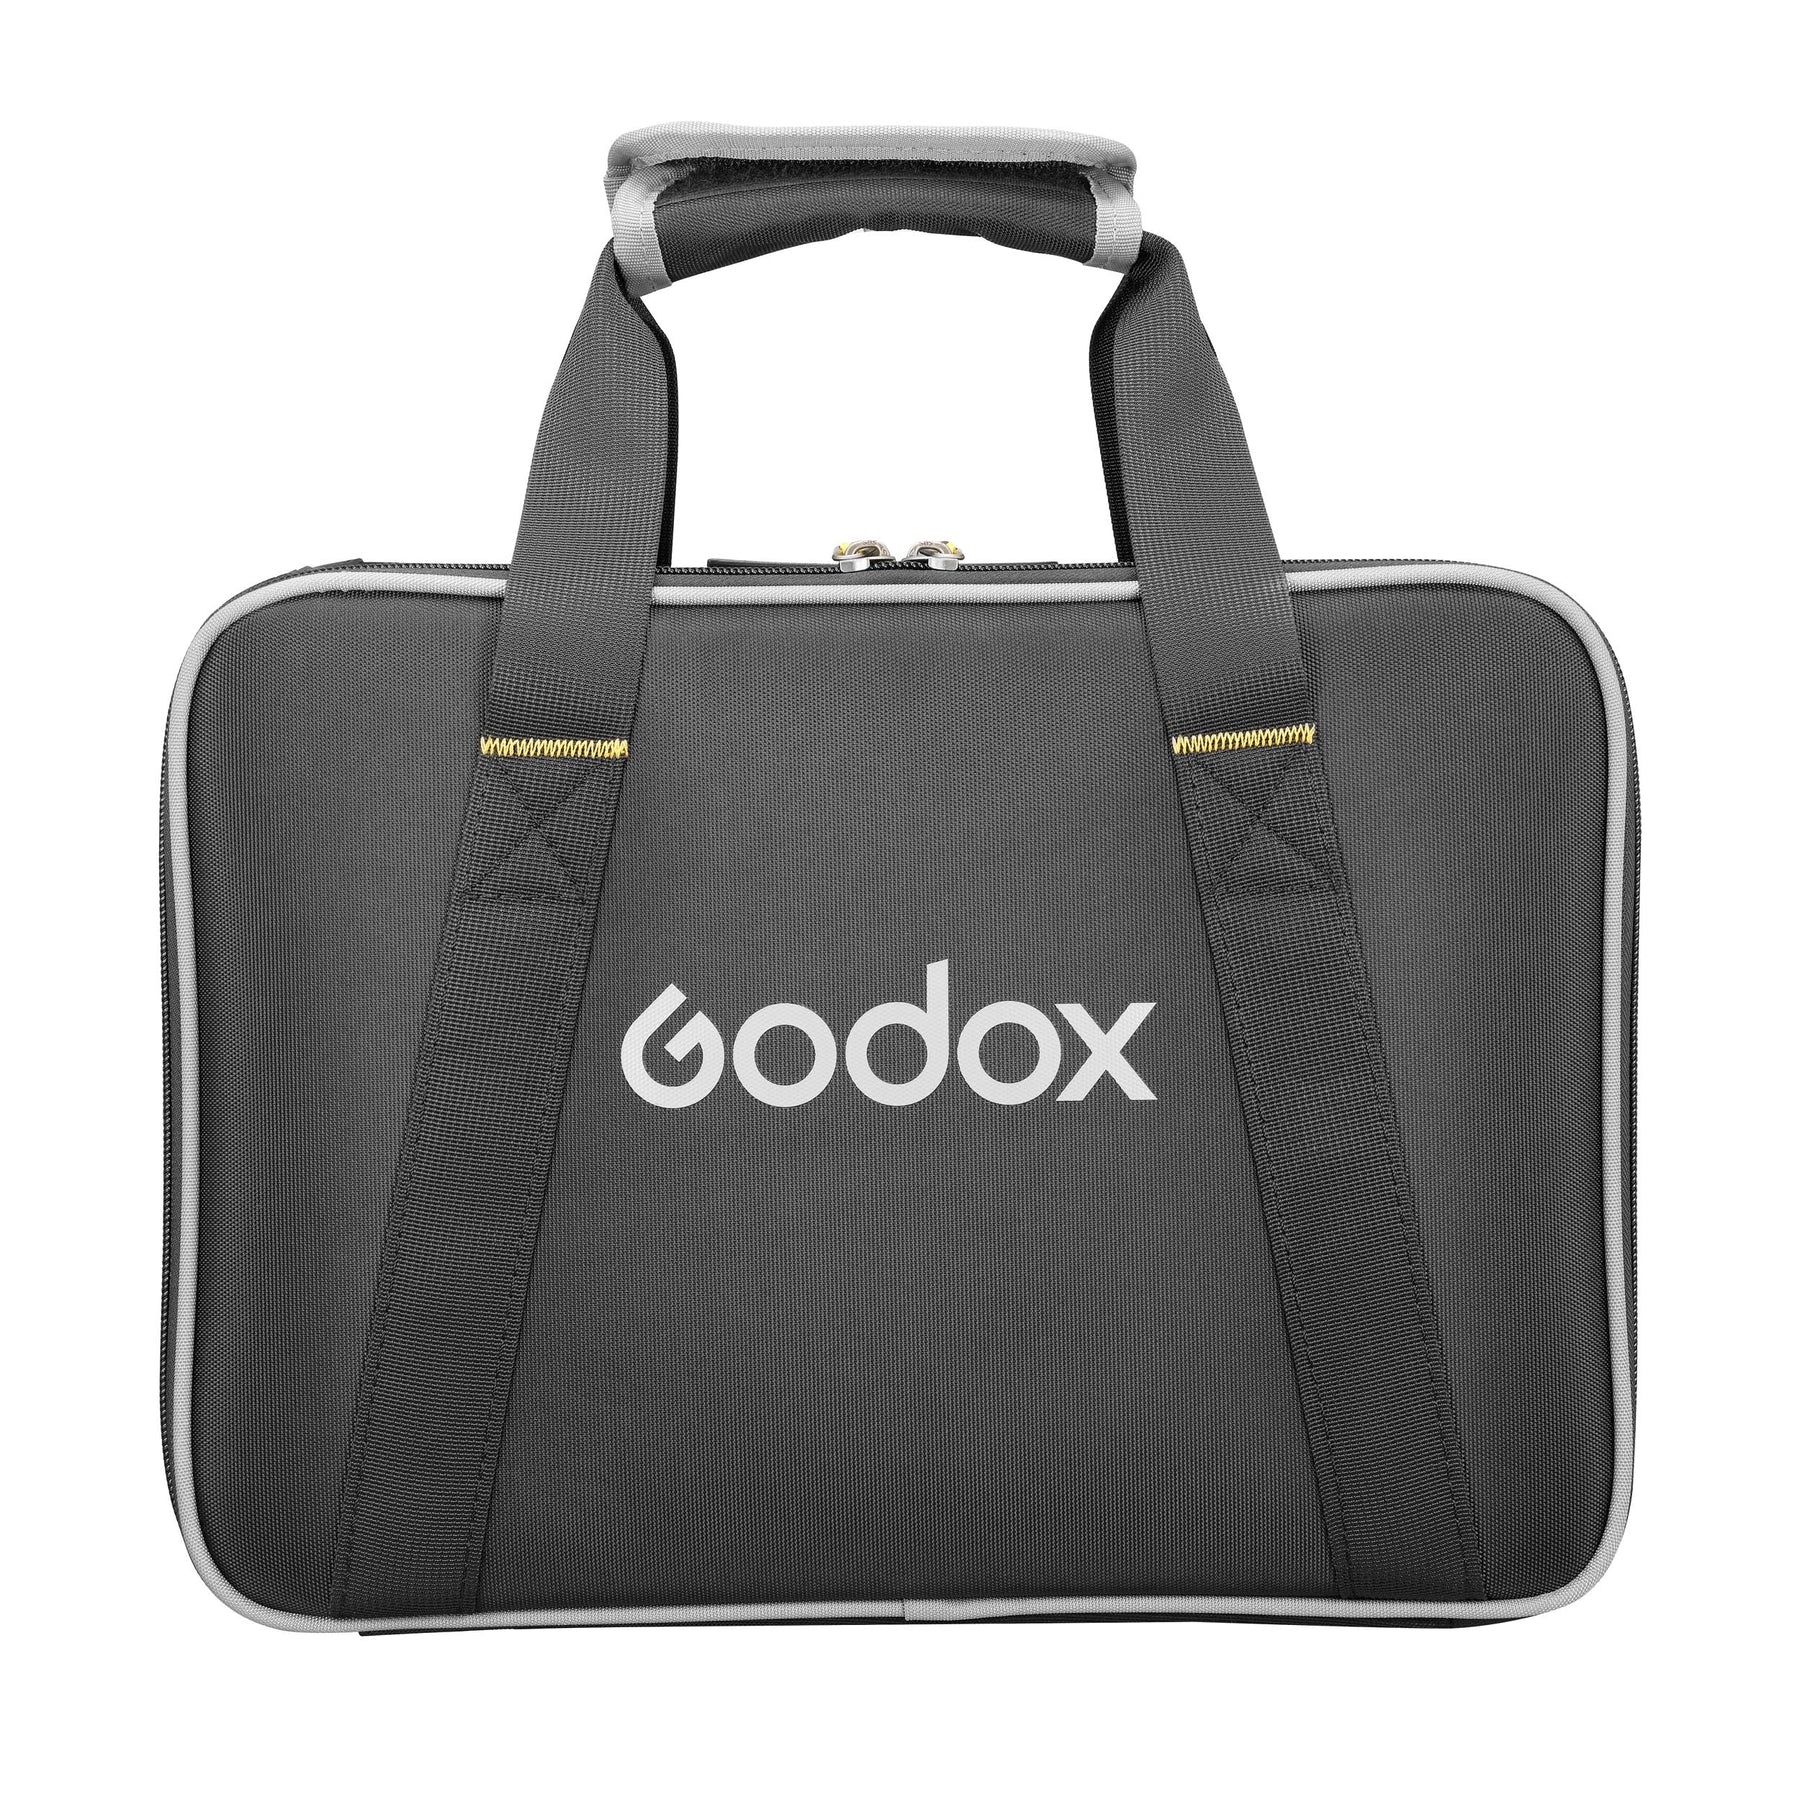     Godox Knowled C10R-K8     Ultra-mart